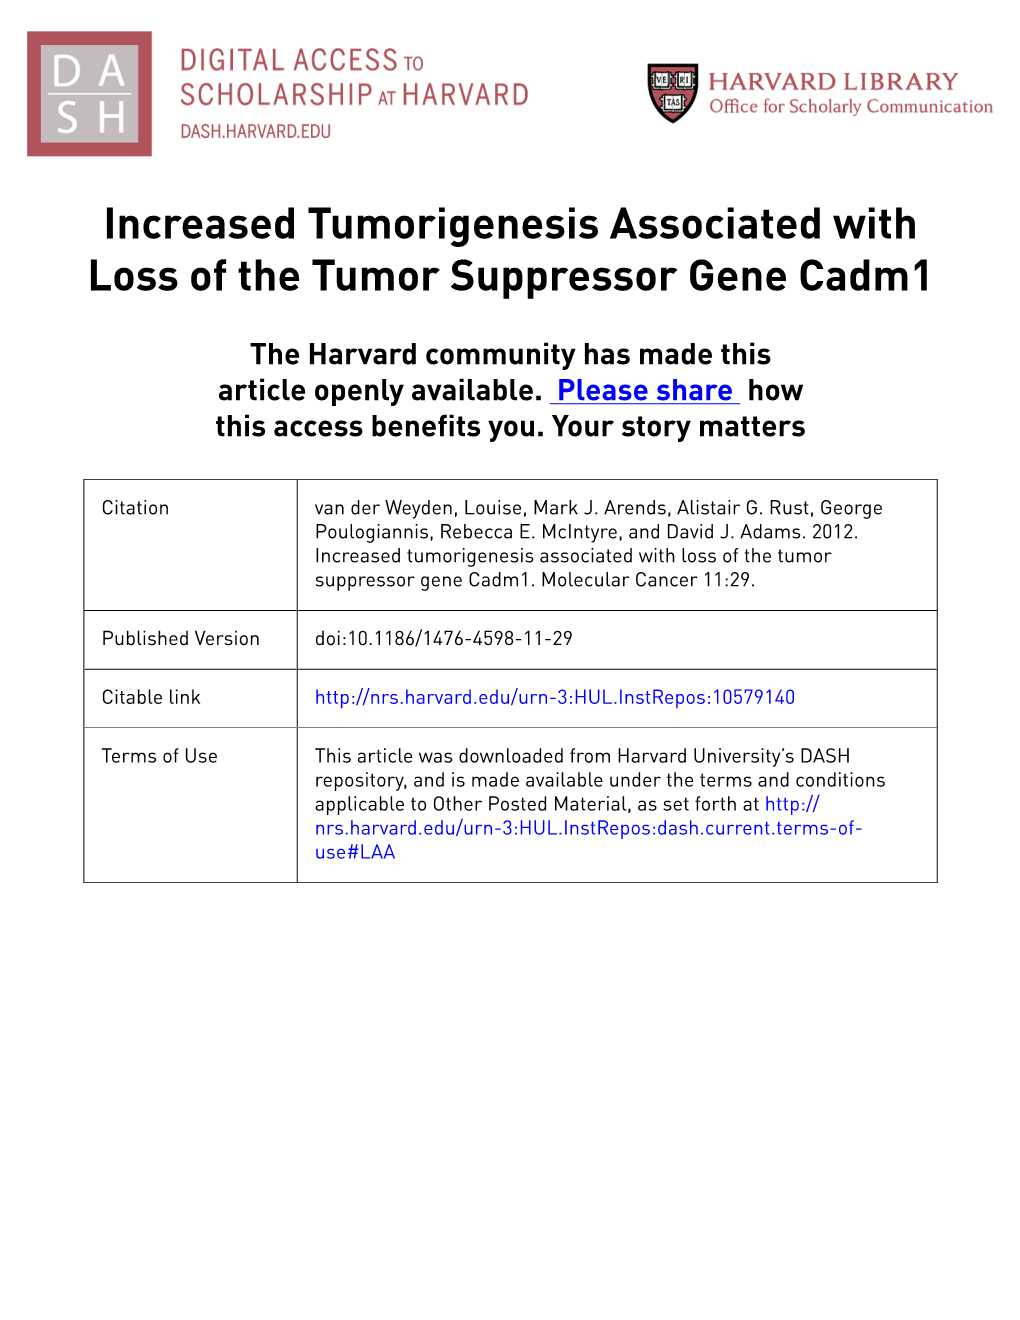 Increased Tumorigenesis Associated with Loss of the Tumor Suppressor Gene Cadm1